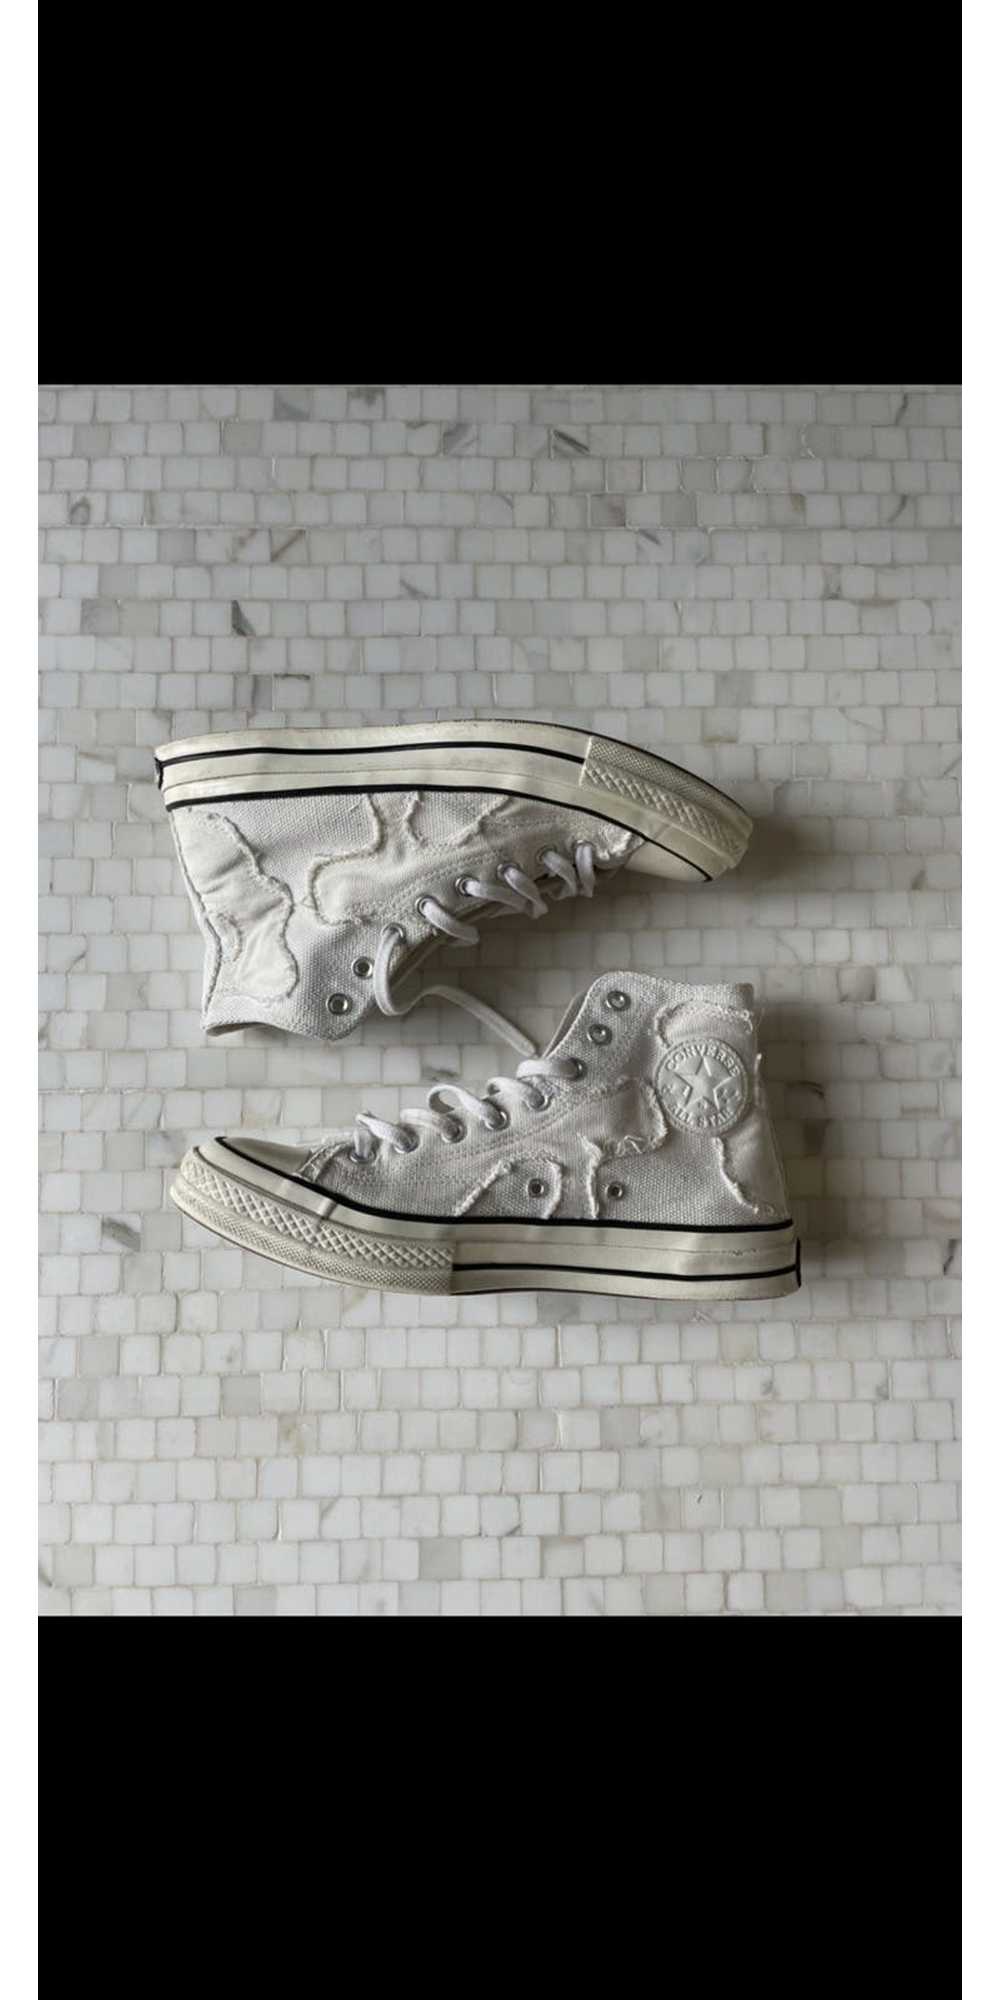 Converse Converse Sneakers - image 1